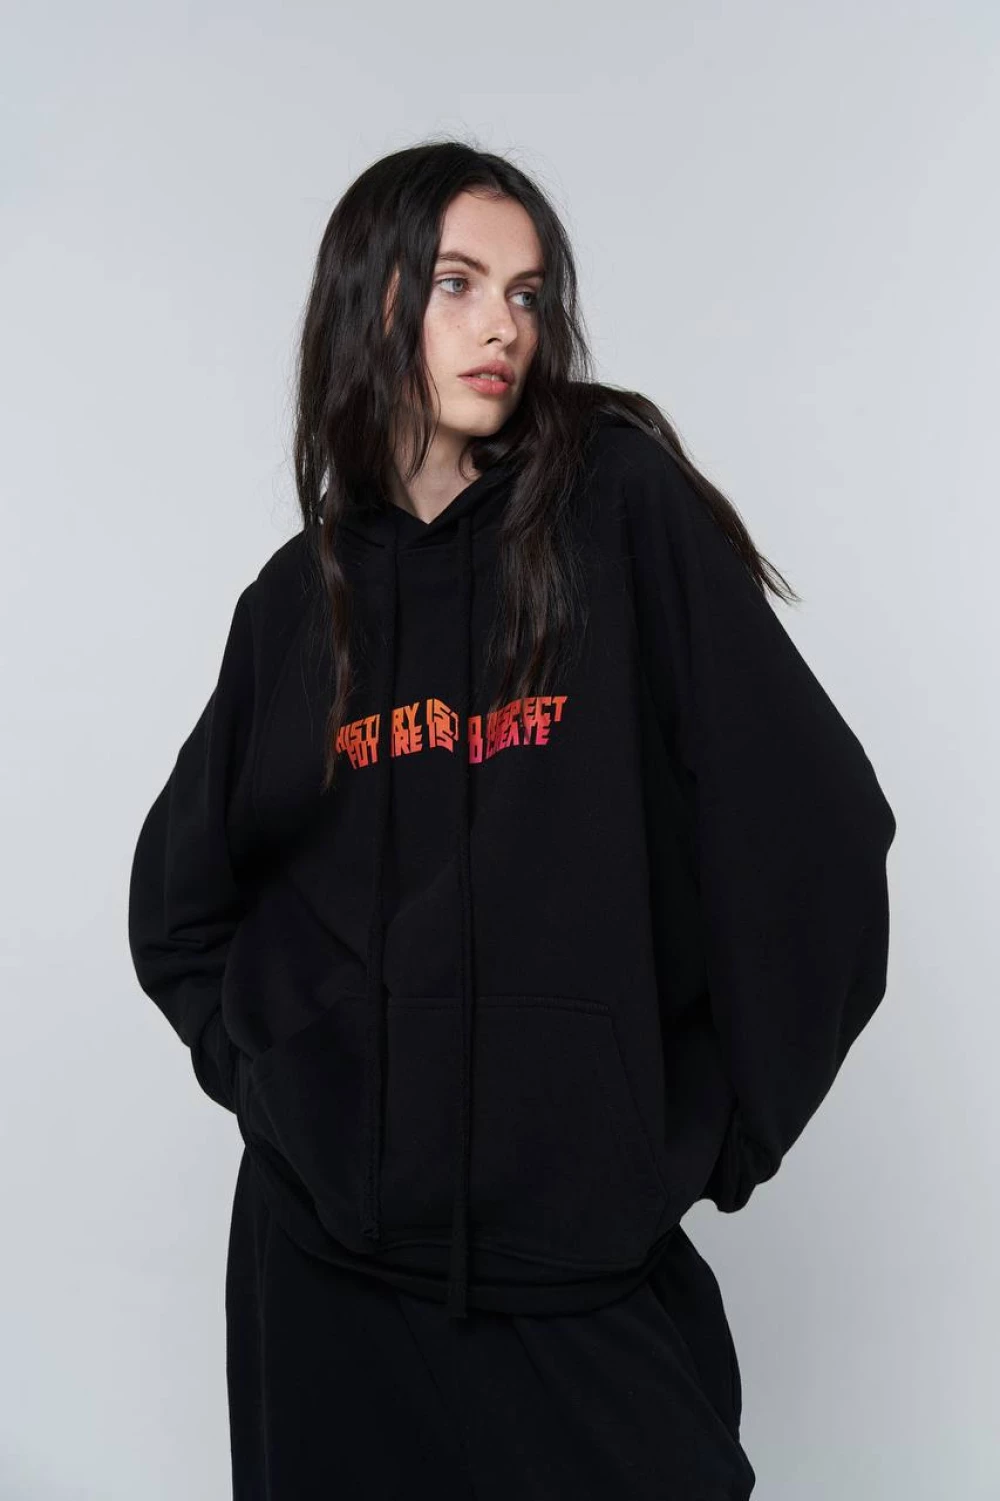 hoodie "history // future" in black color